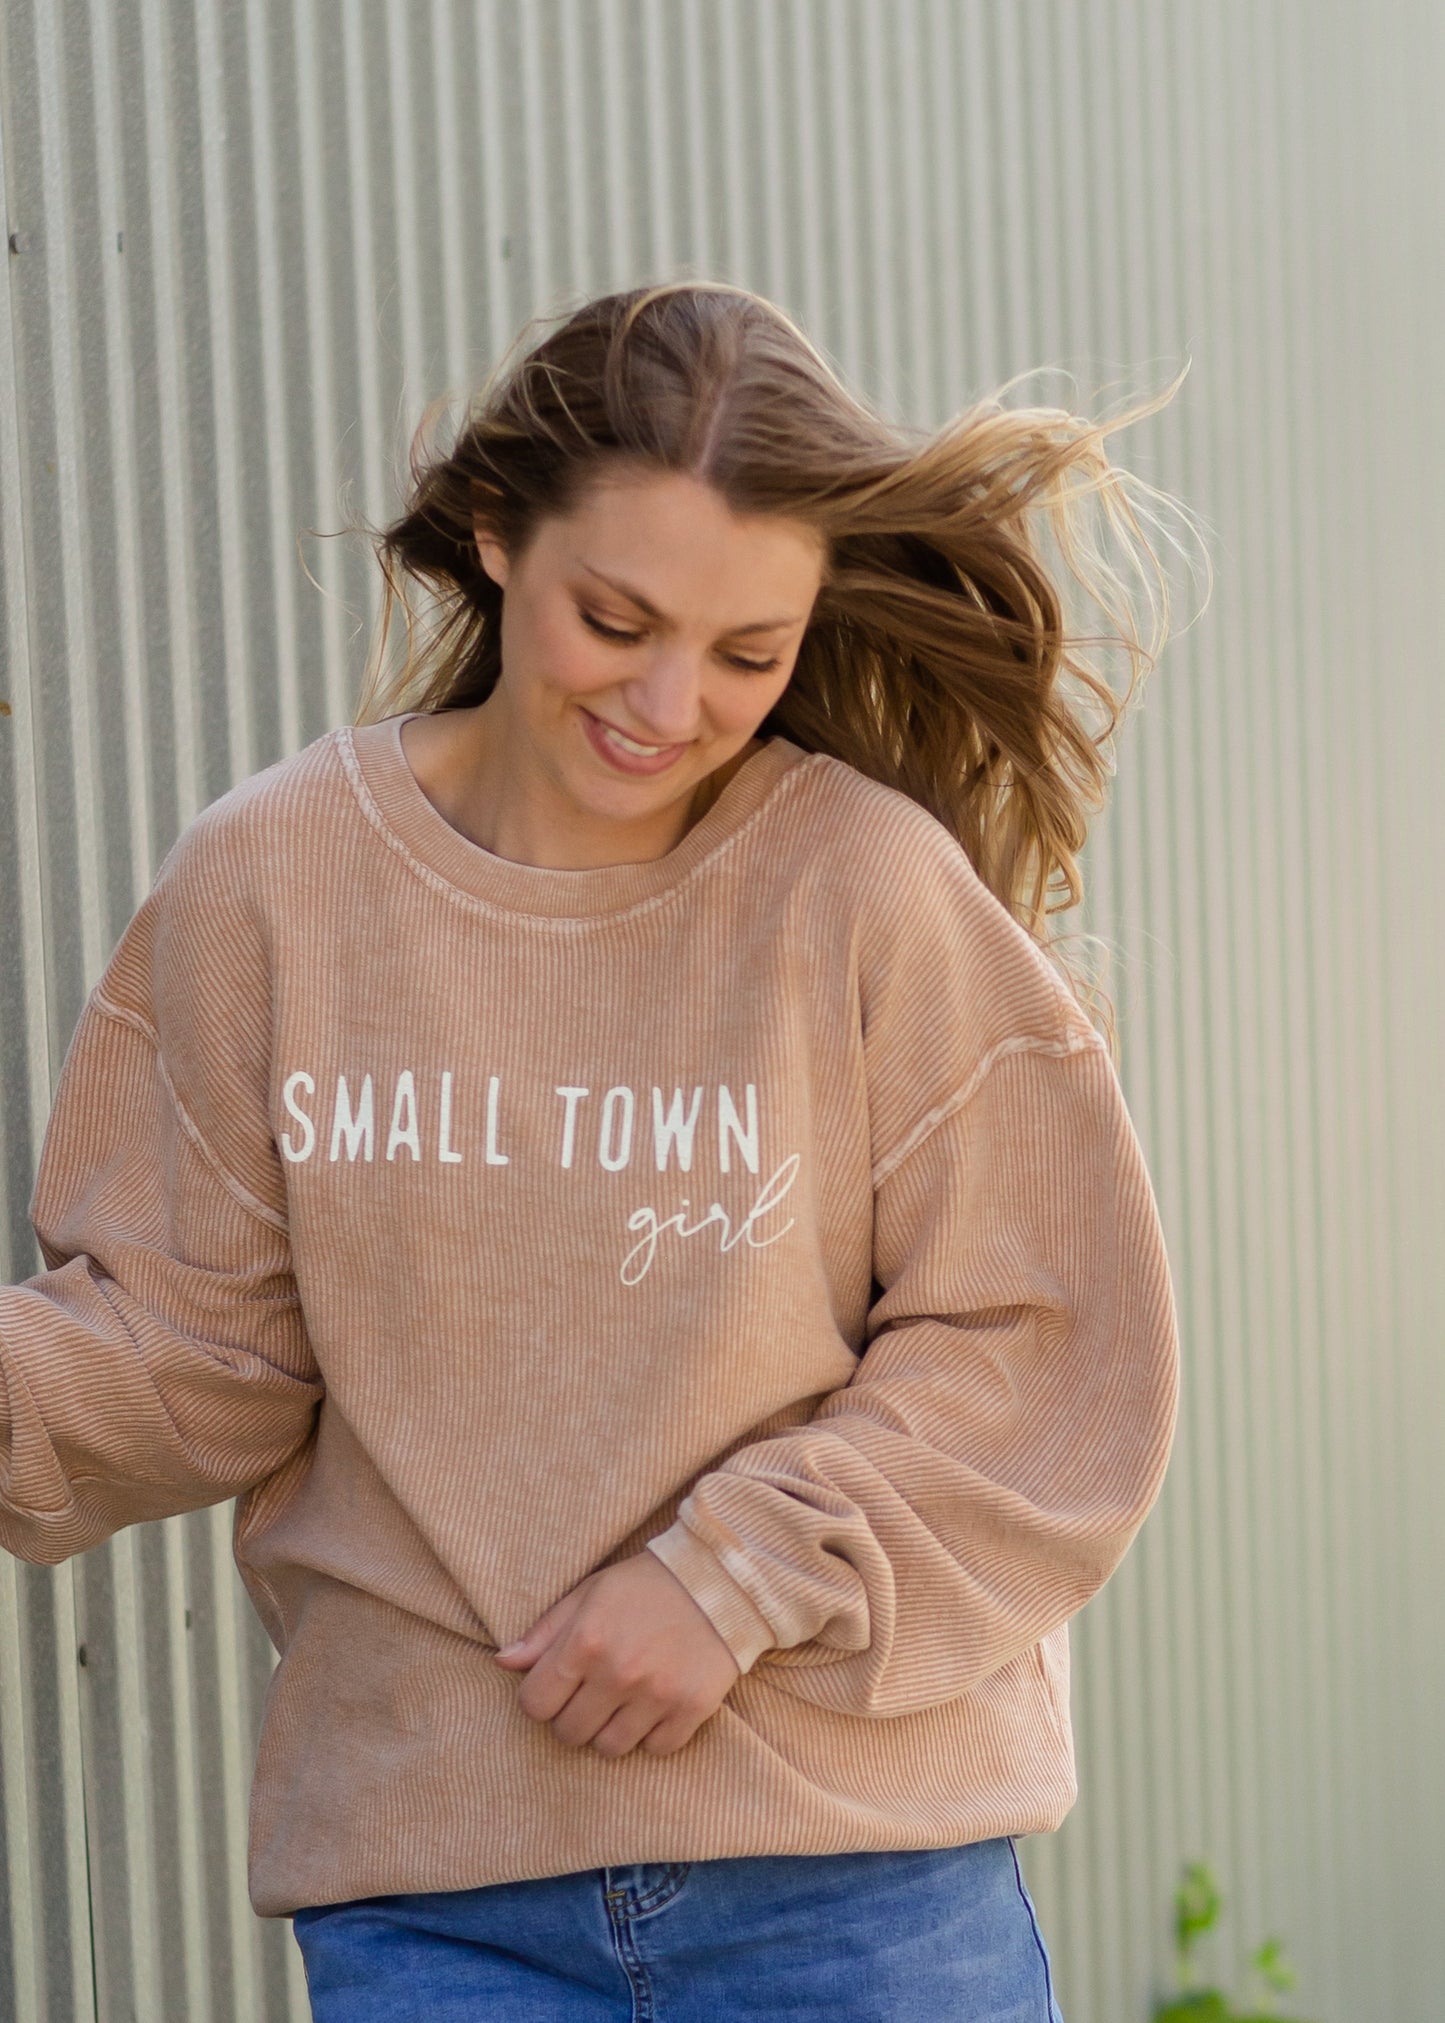 Small Town Girl Crewneck Sweatshirt Tops Latte / S